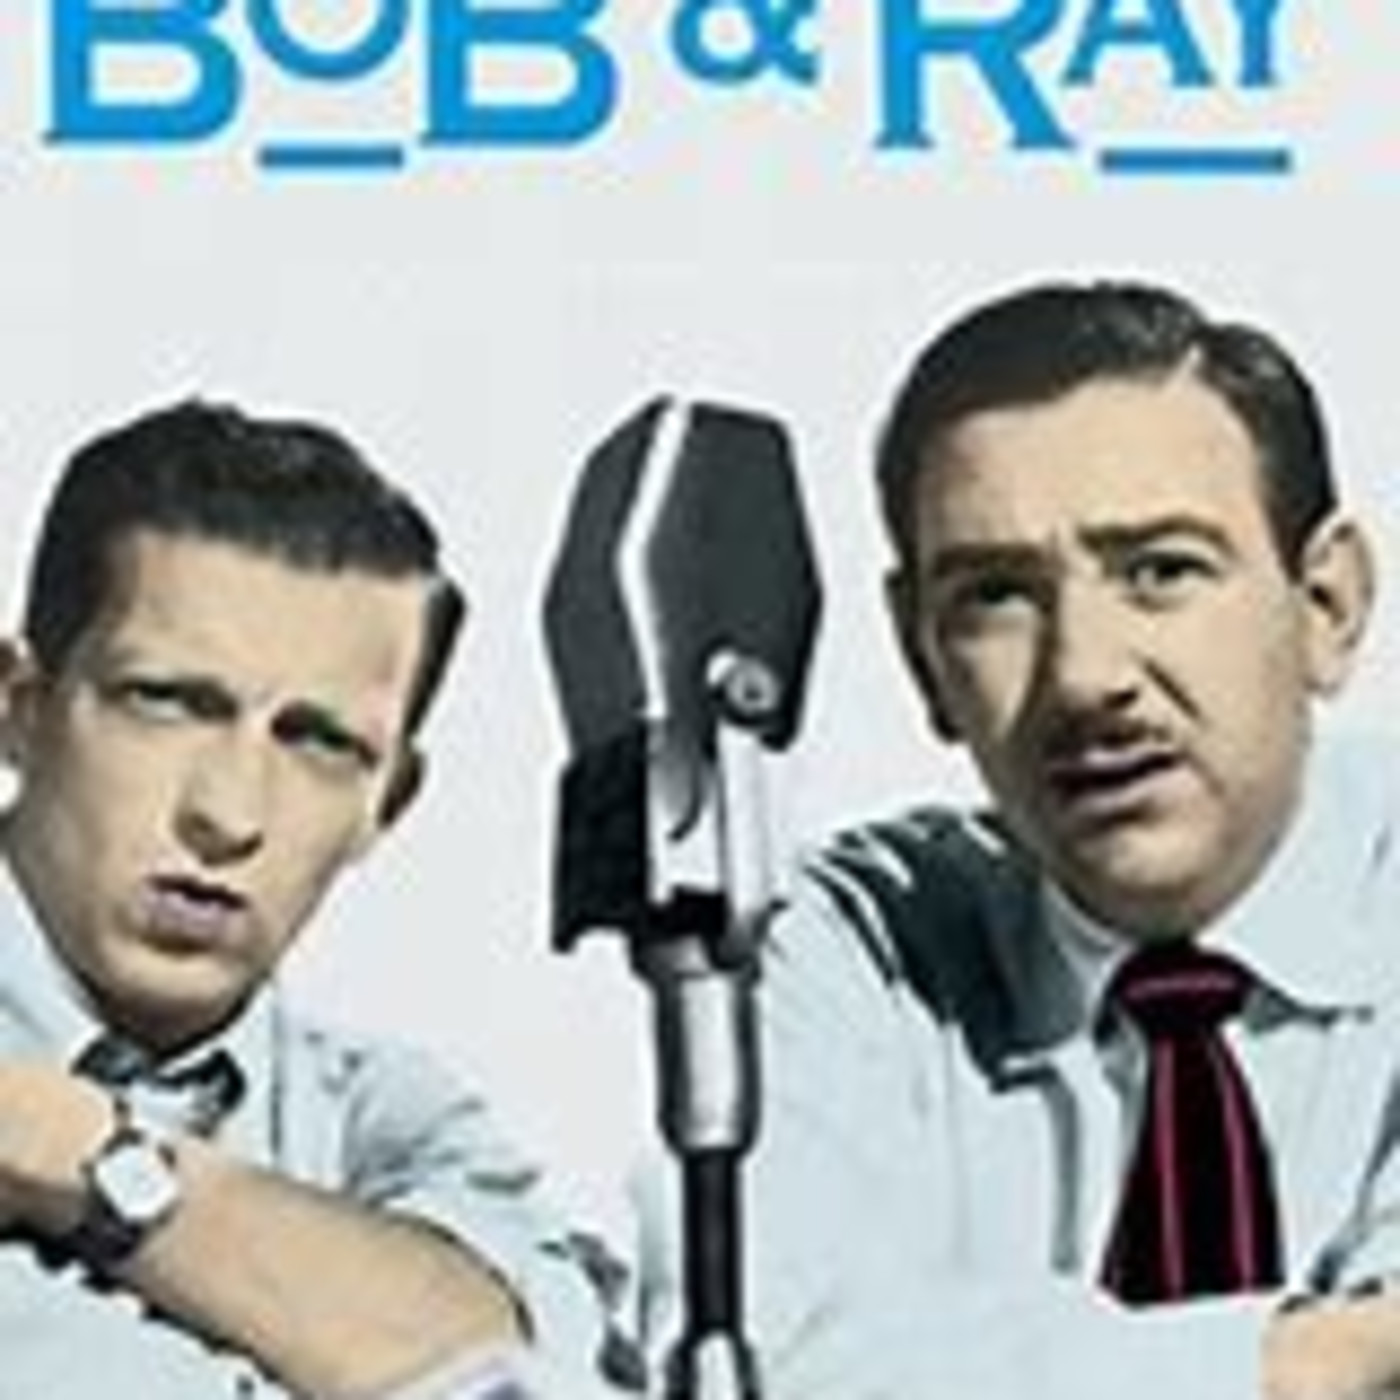 Bob and Ray Show 490715 Bob  Ray - 10